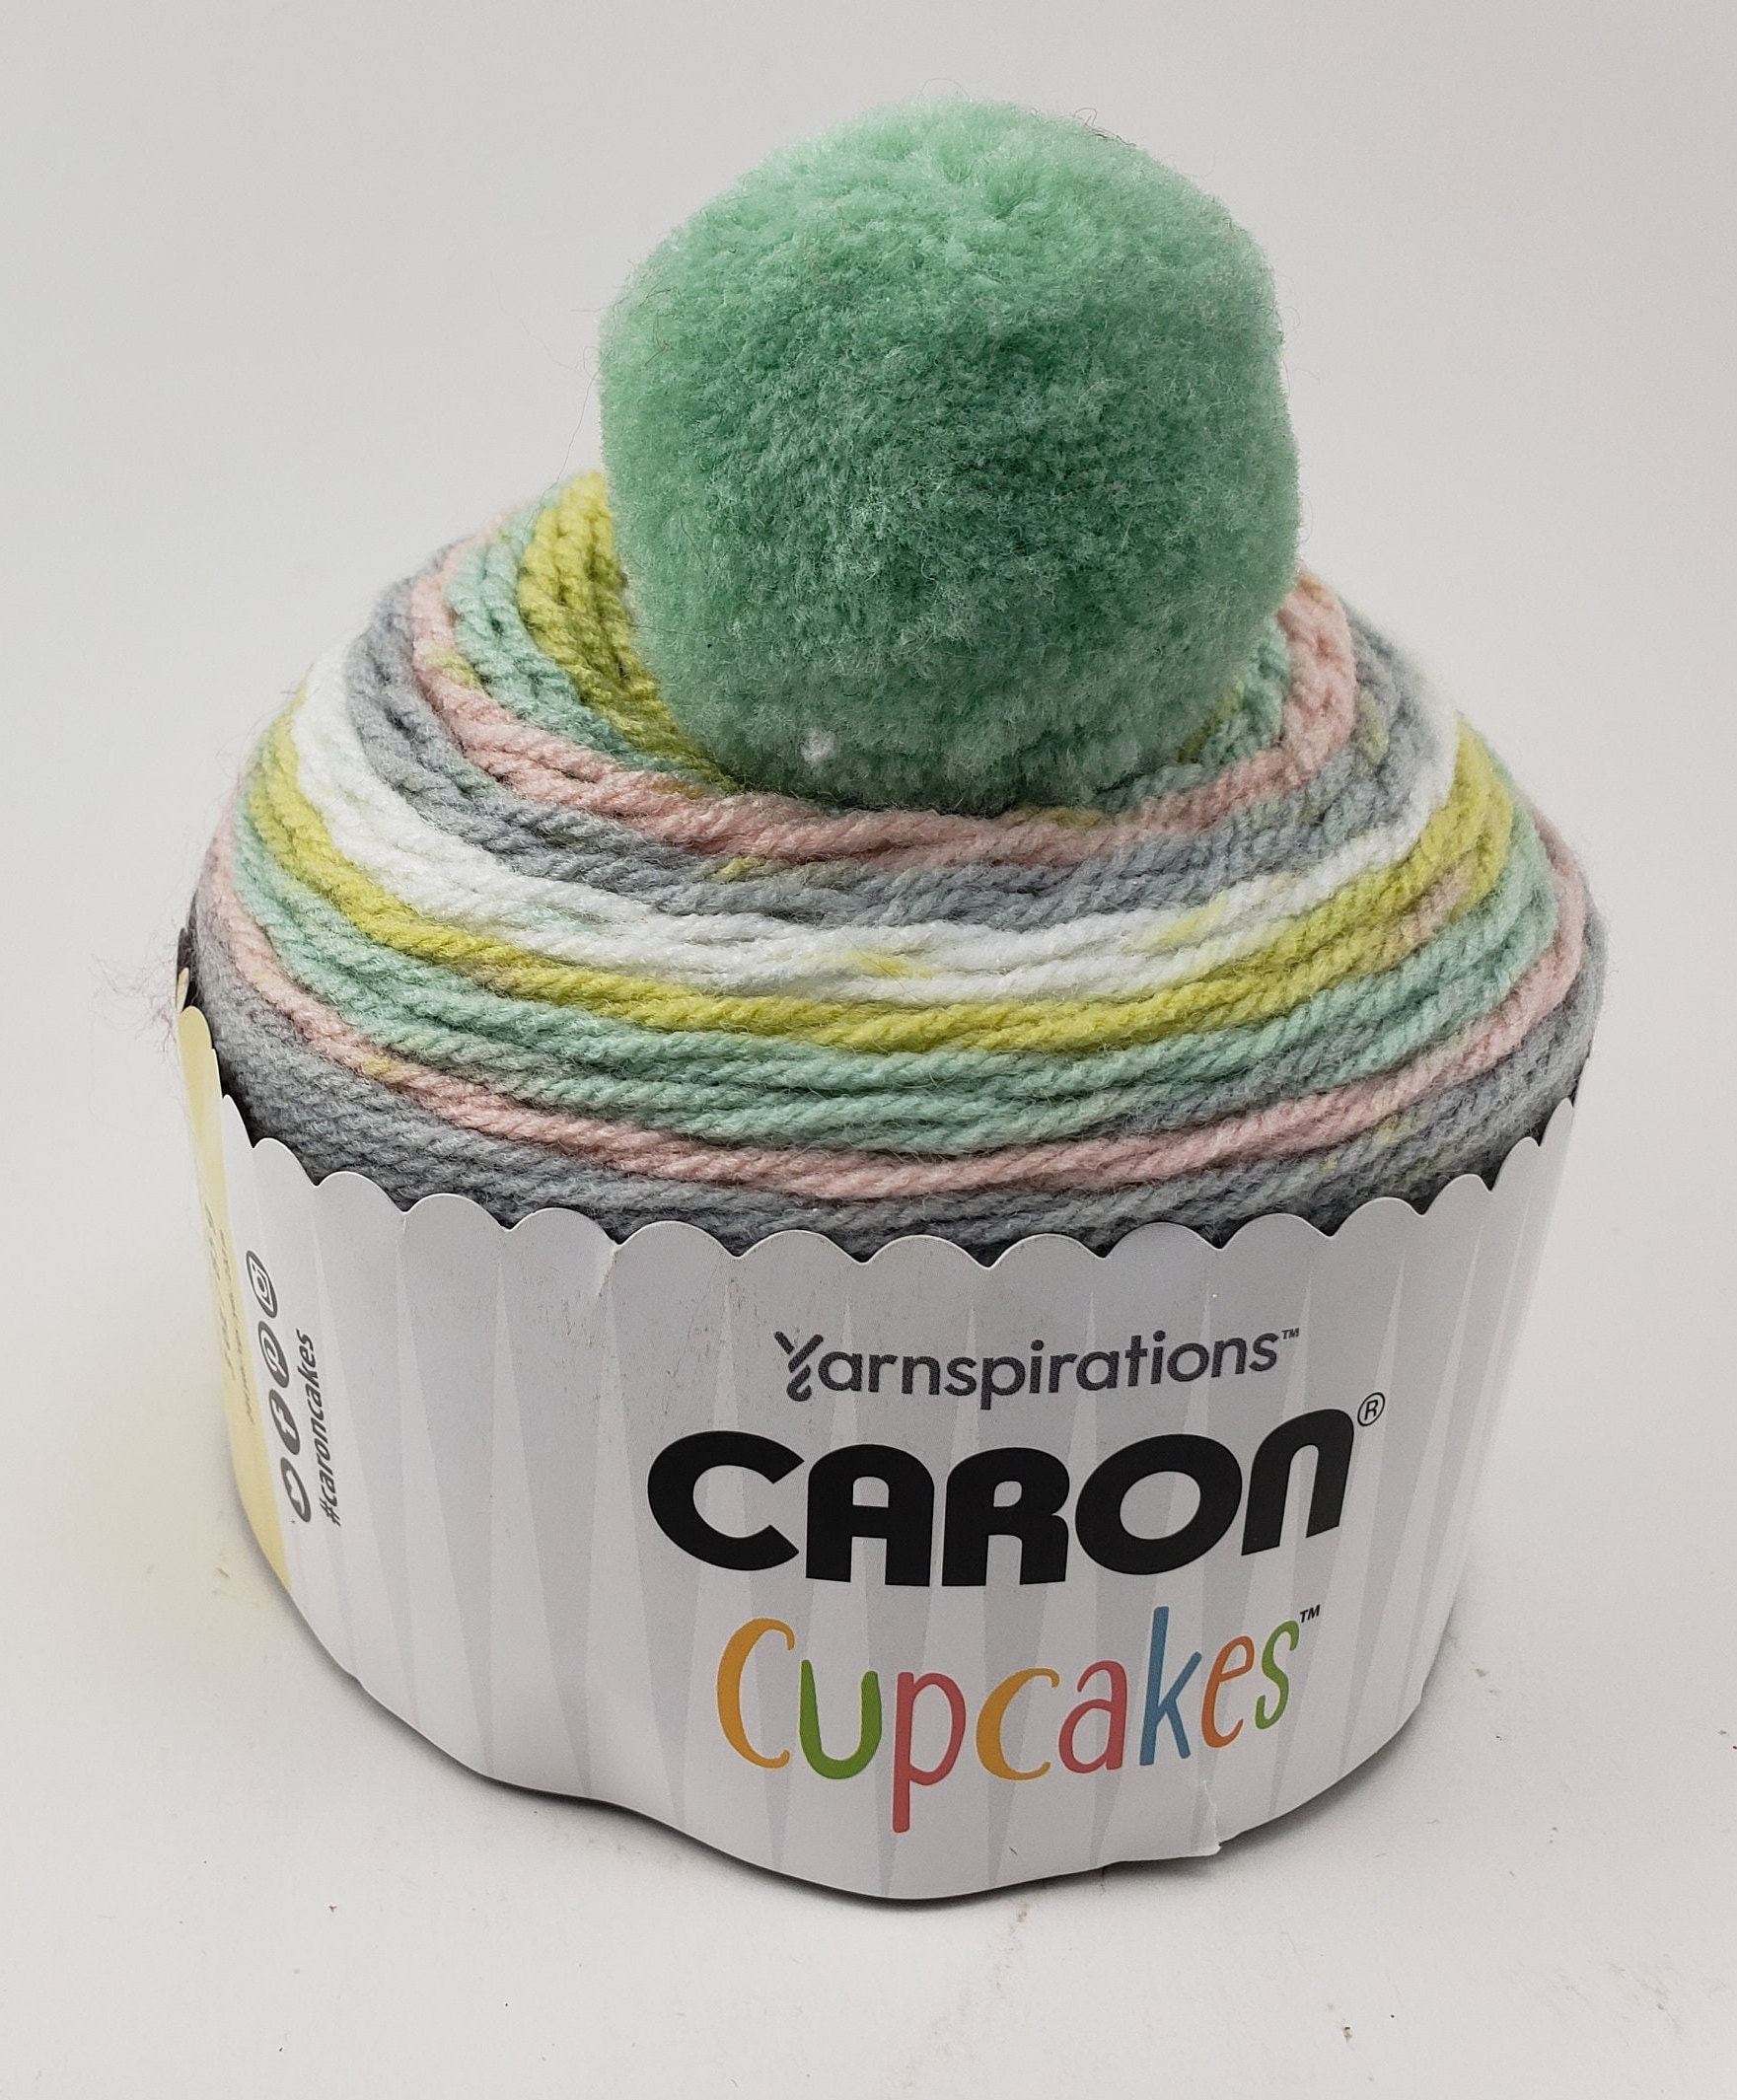 Caron Yarnspirations Chunky Cakes Dulce De Leche 